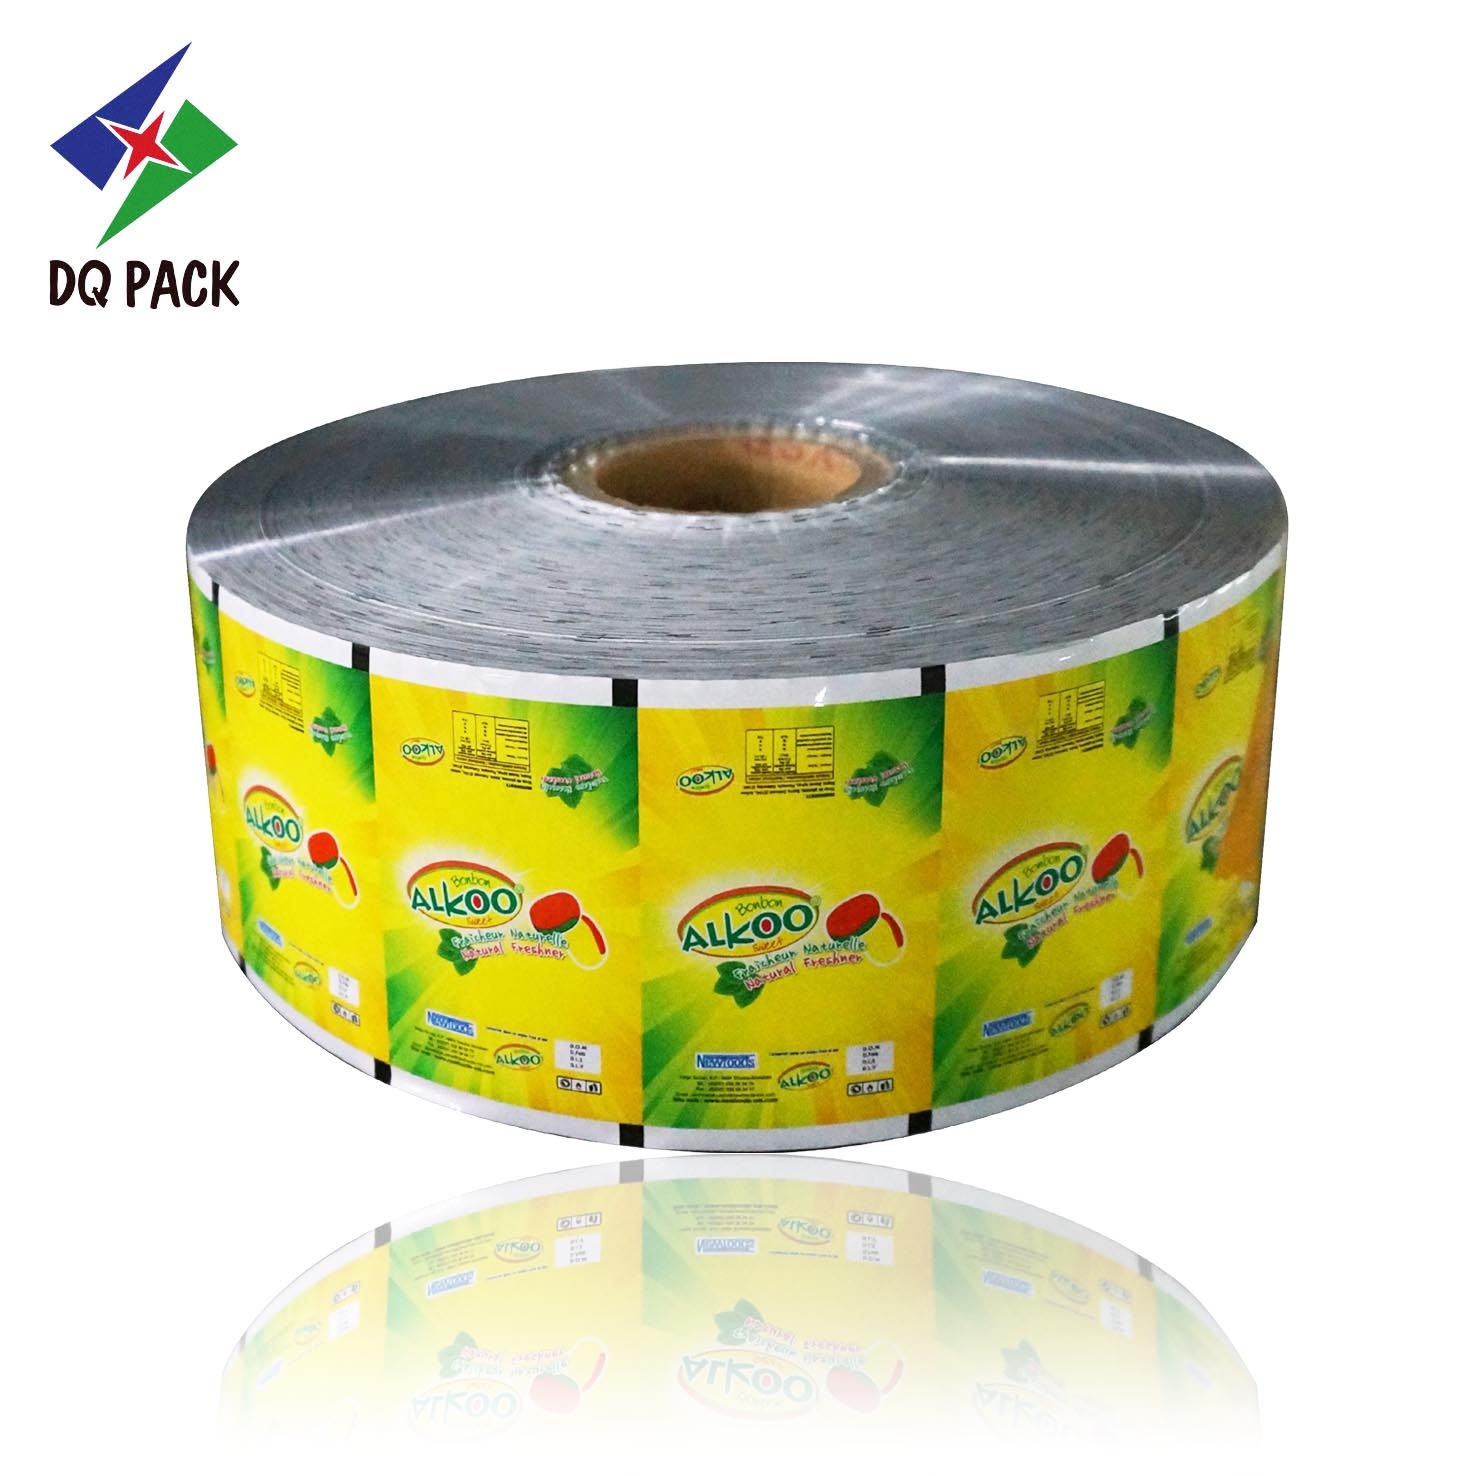 DQ PACK China Plastic Laminated Metallic Tea Packaging Manufacturers